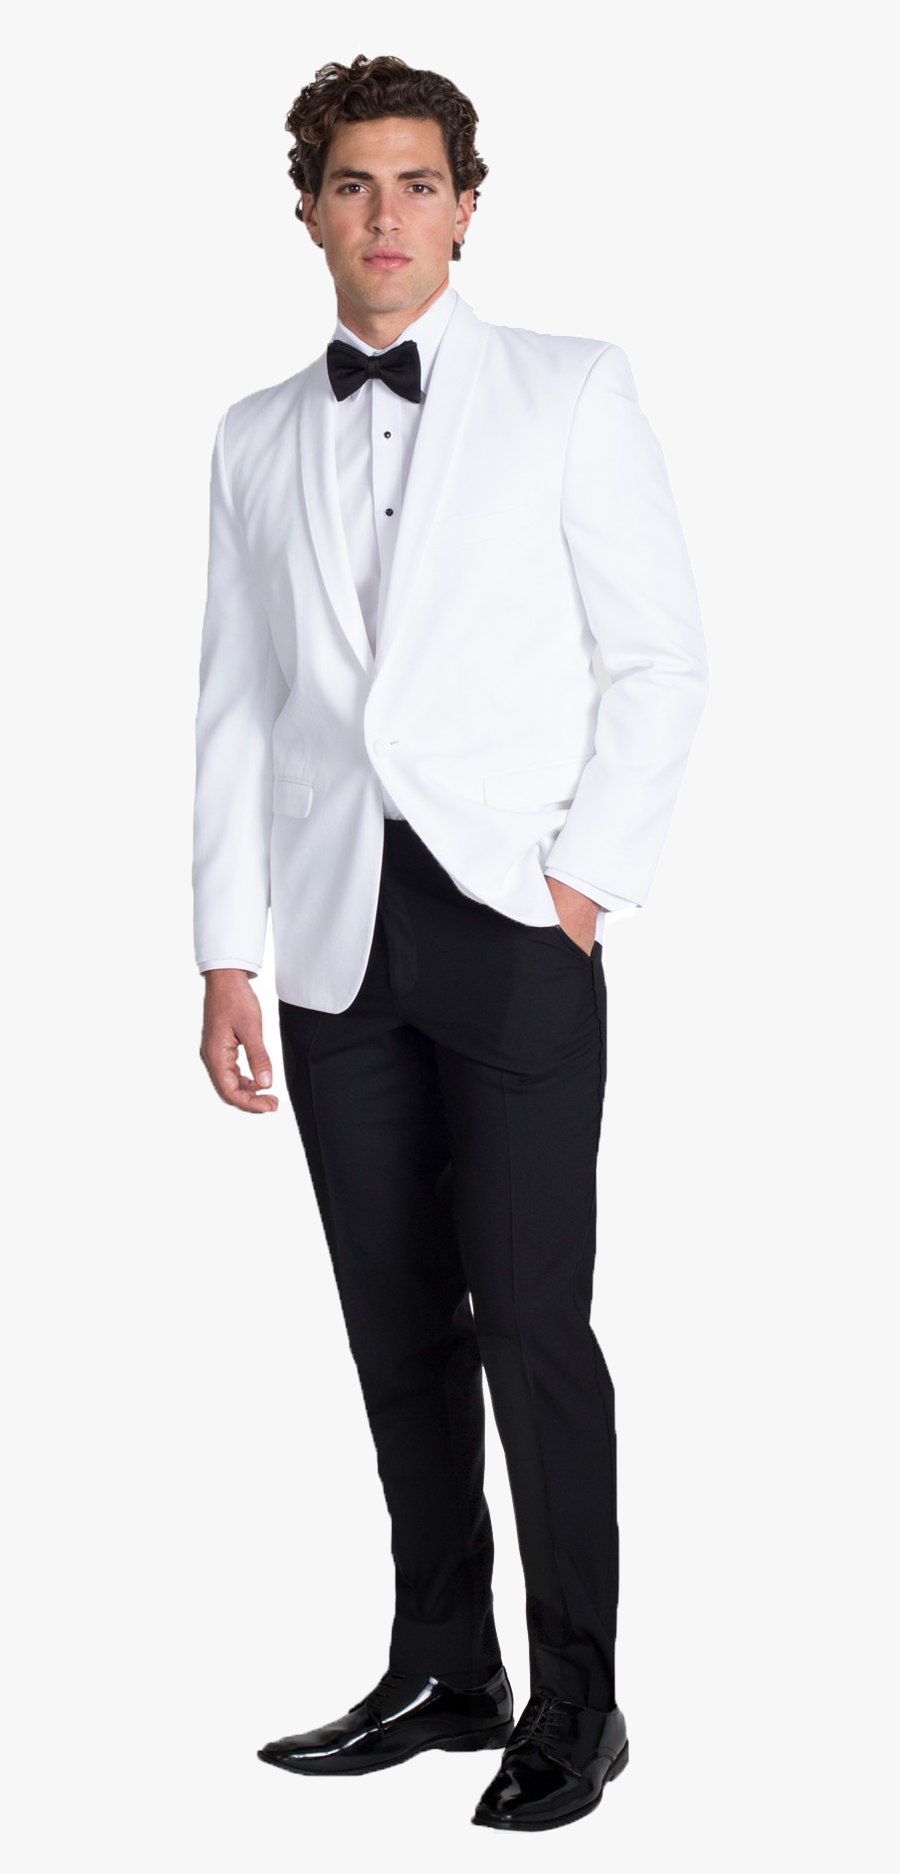 White Tuxedo Suit Png Image File - White Dinner Jacket, Transparent Clipart